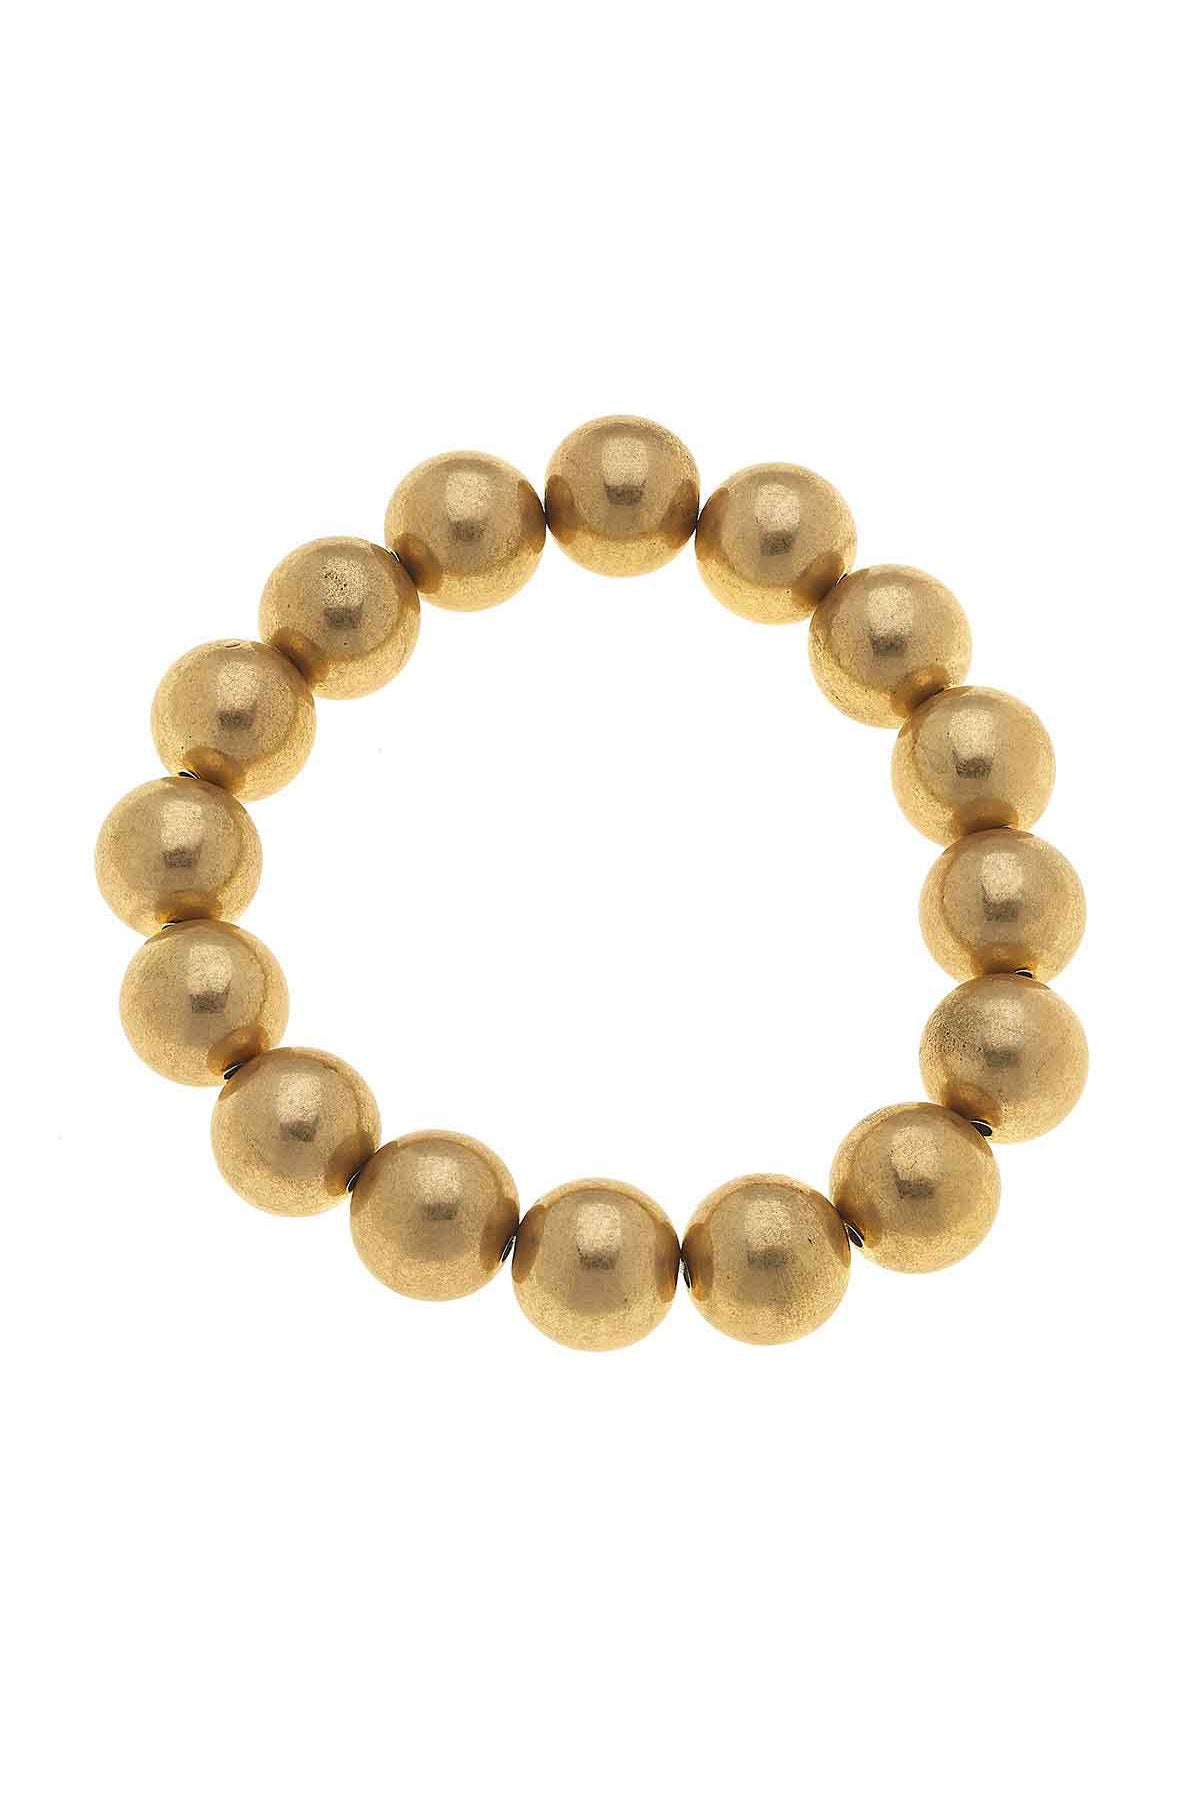 Eleanor 14MM Ball Bead Stretch Bracelet in Worn Gold